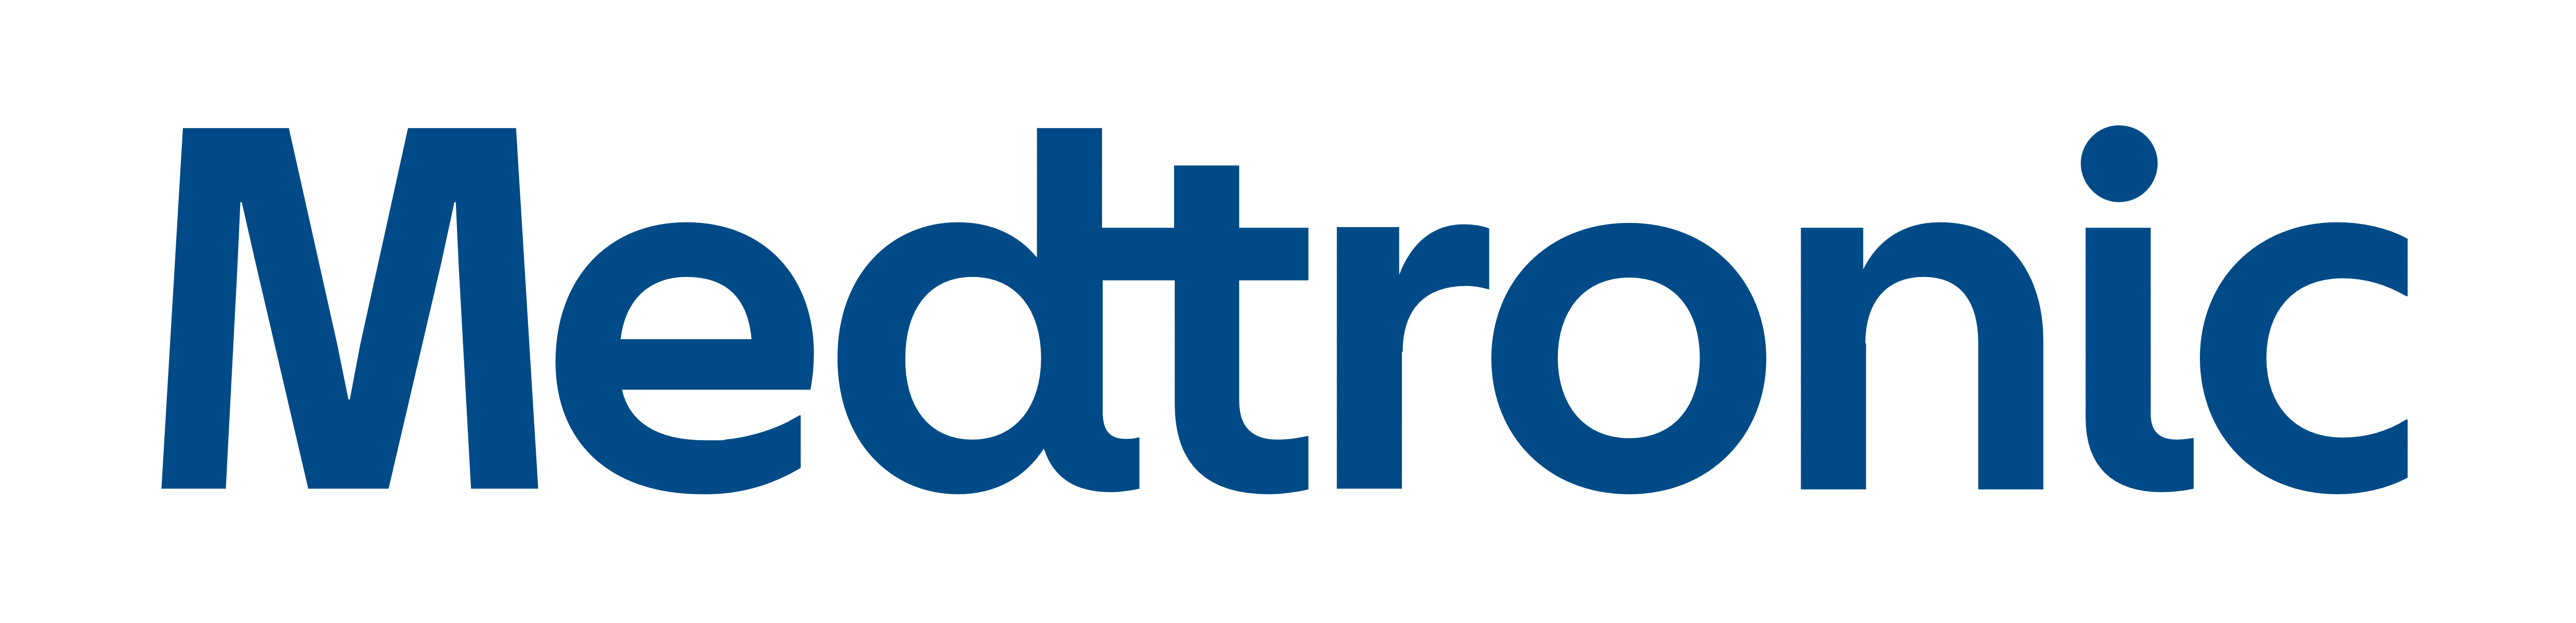 Medtronic_logos